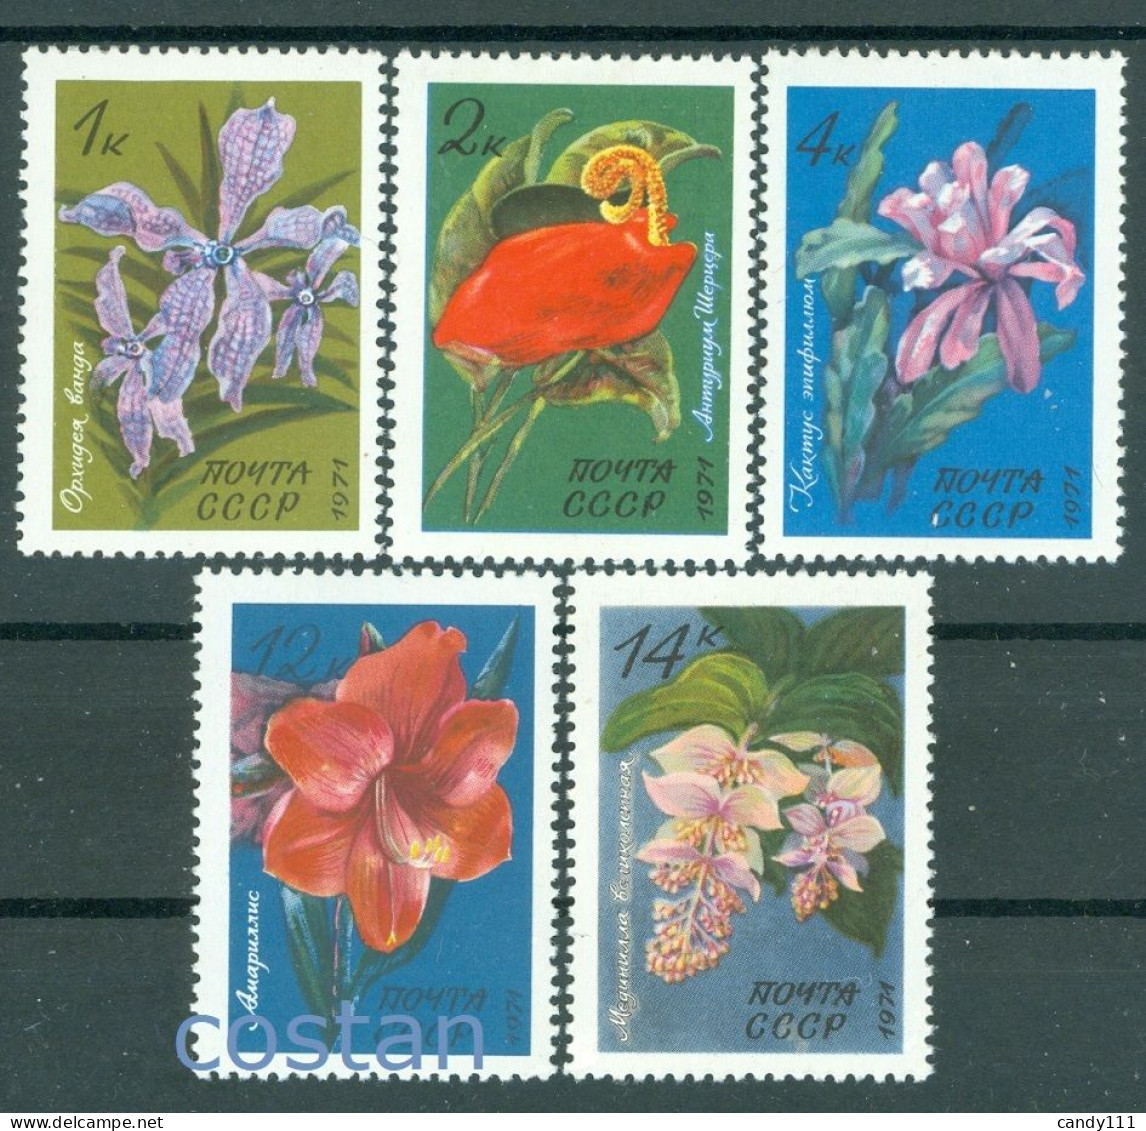 1971 Botanical Garden Flowers,Vanda Orchid,Amaryllis,flamingo Fl,Russia,3956,MNH - Nuovi